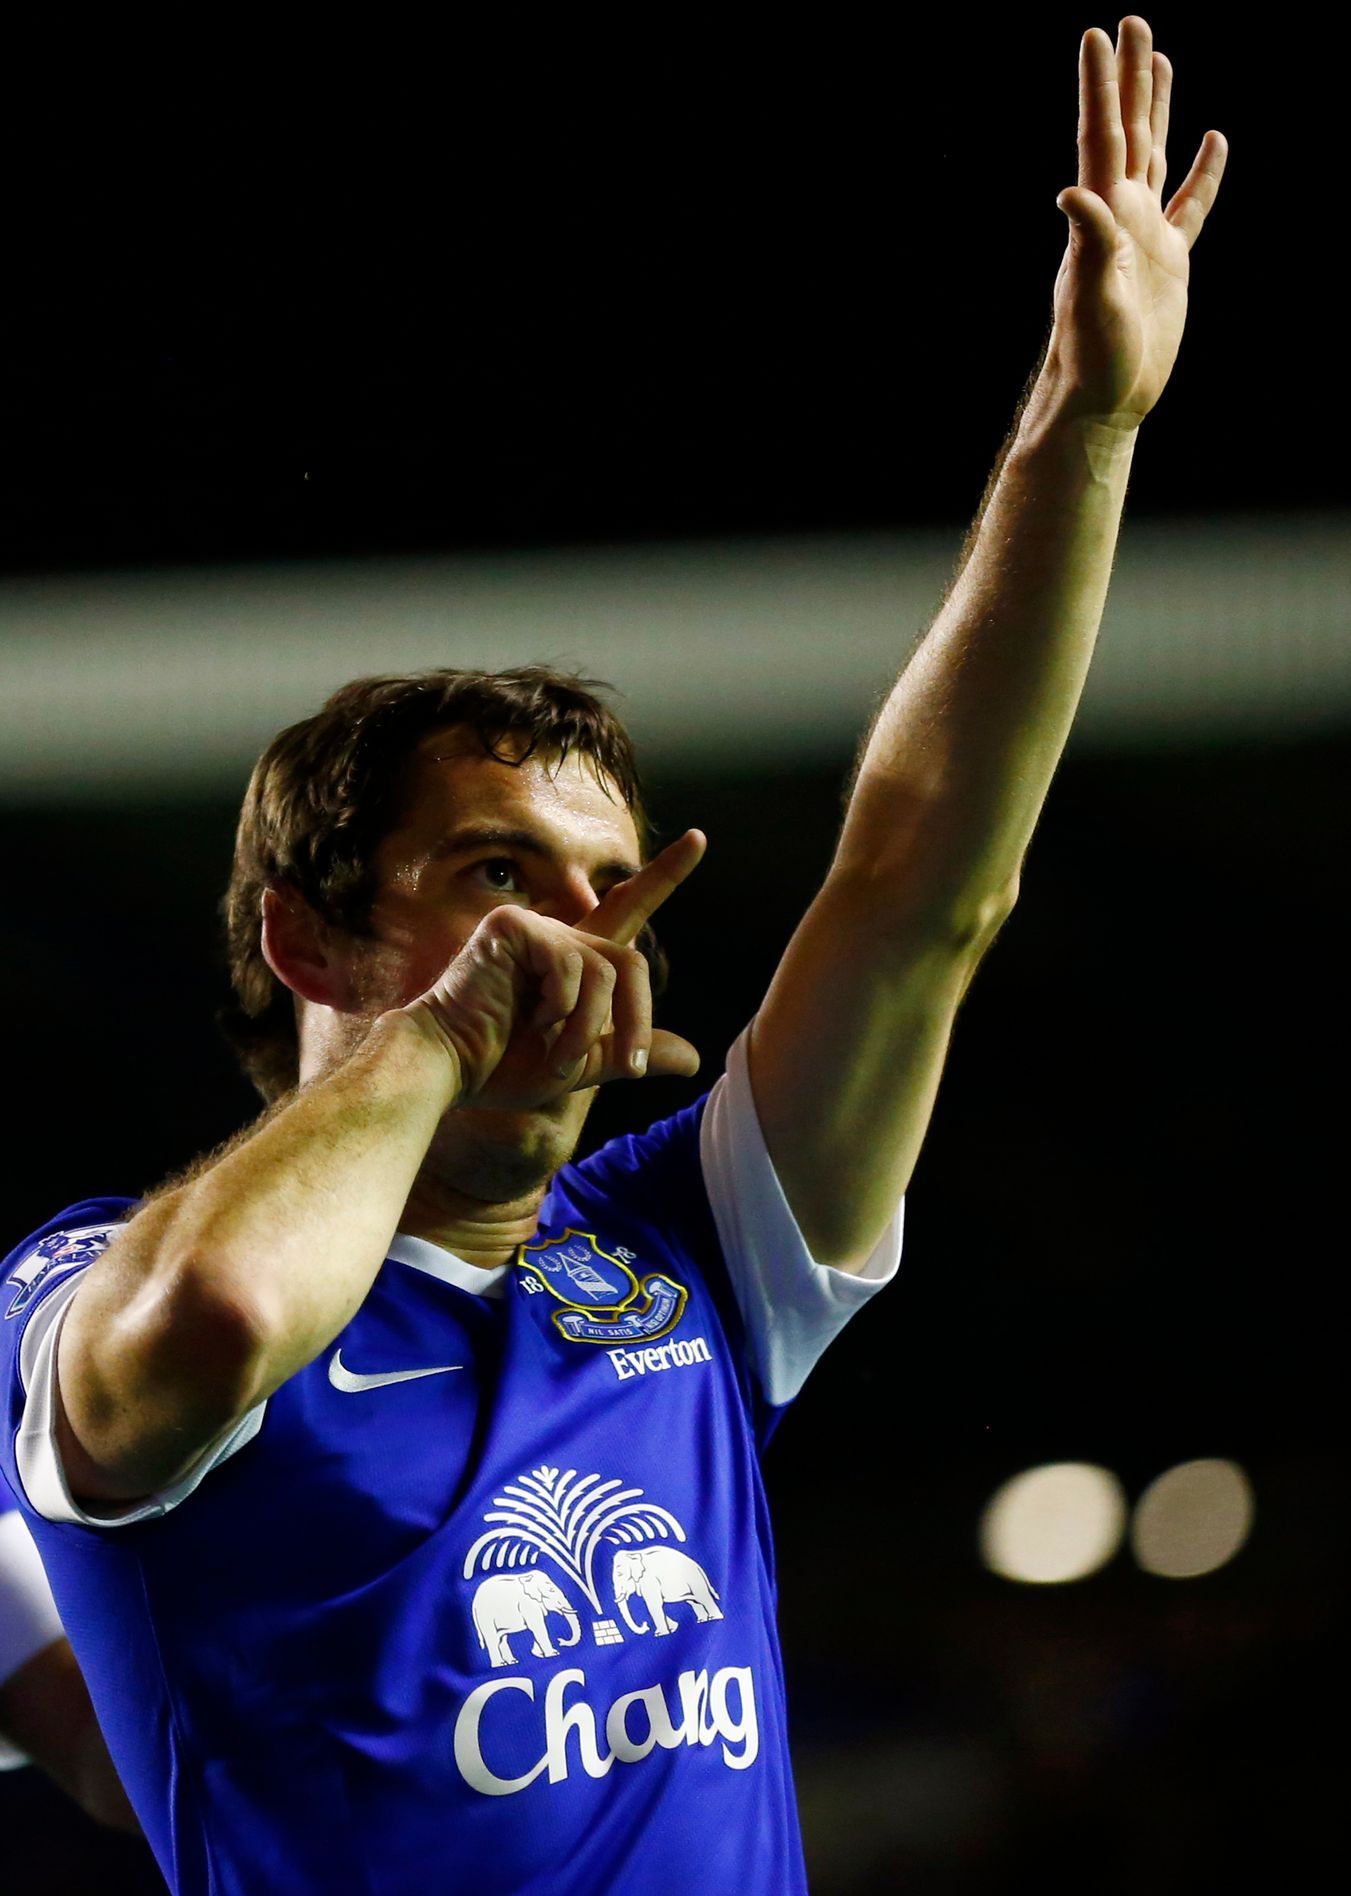 Leighton Baines slaví gól v zápase Everton - Newcastle